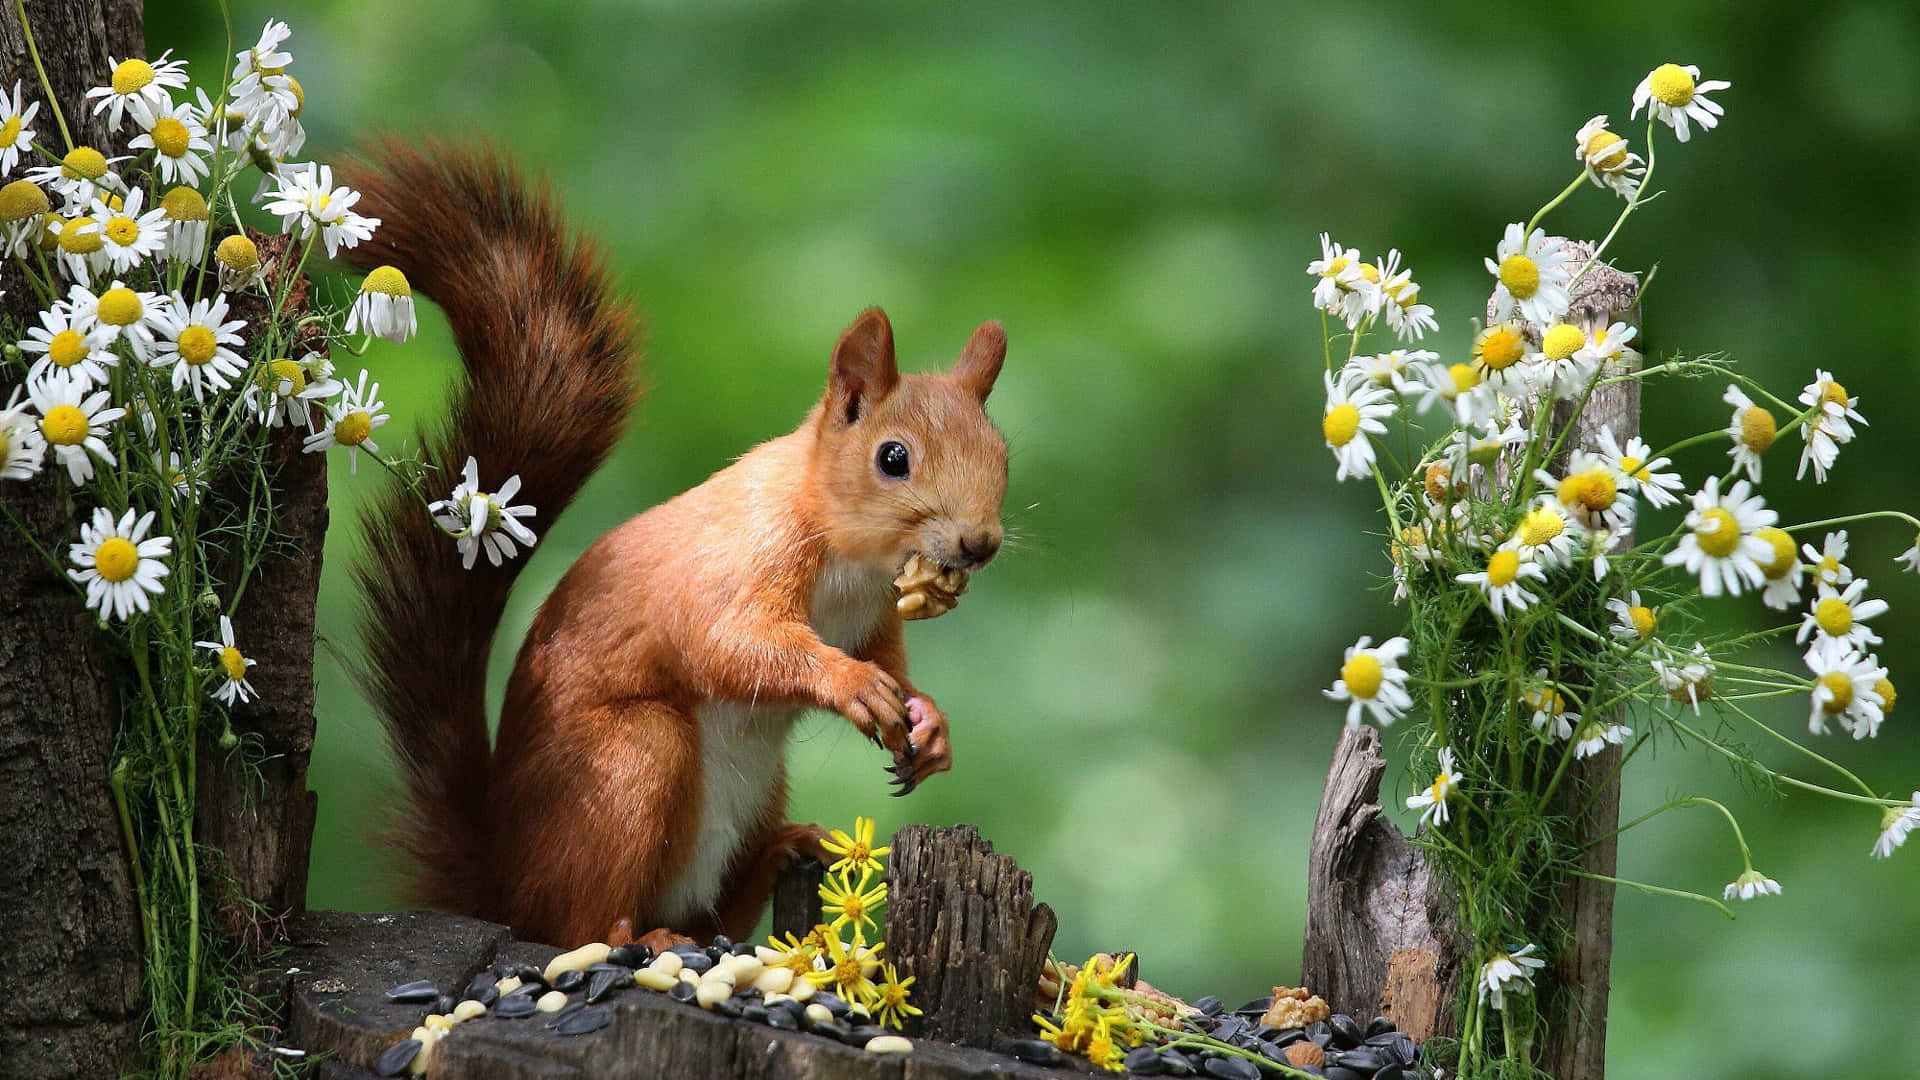 Red Squirrel Enjoying Snackamidst Flowers.jpg Wallpaper